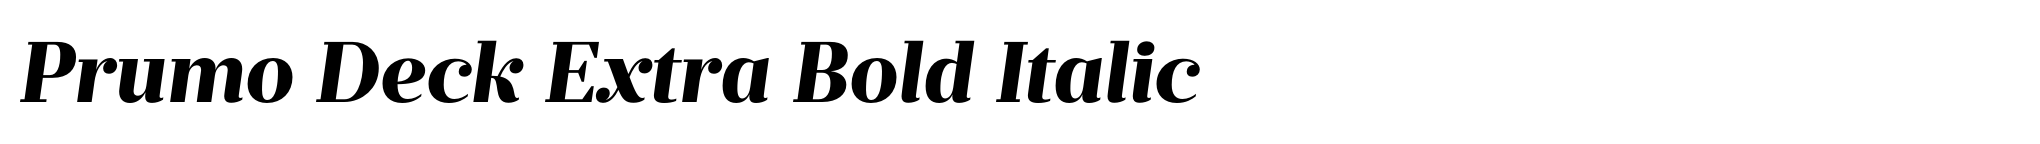 Prumo Deck Extra Bold Italic image